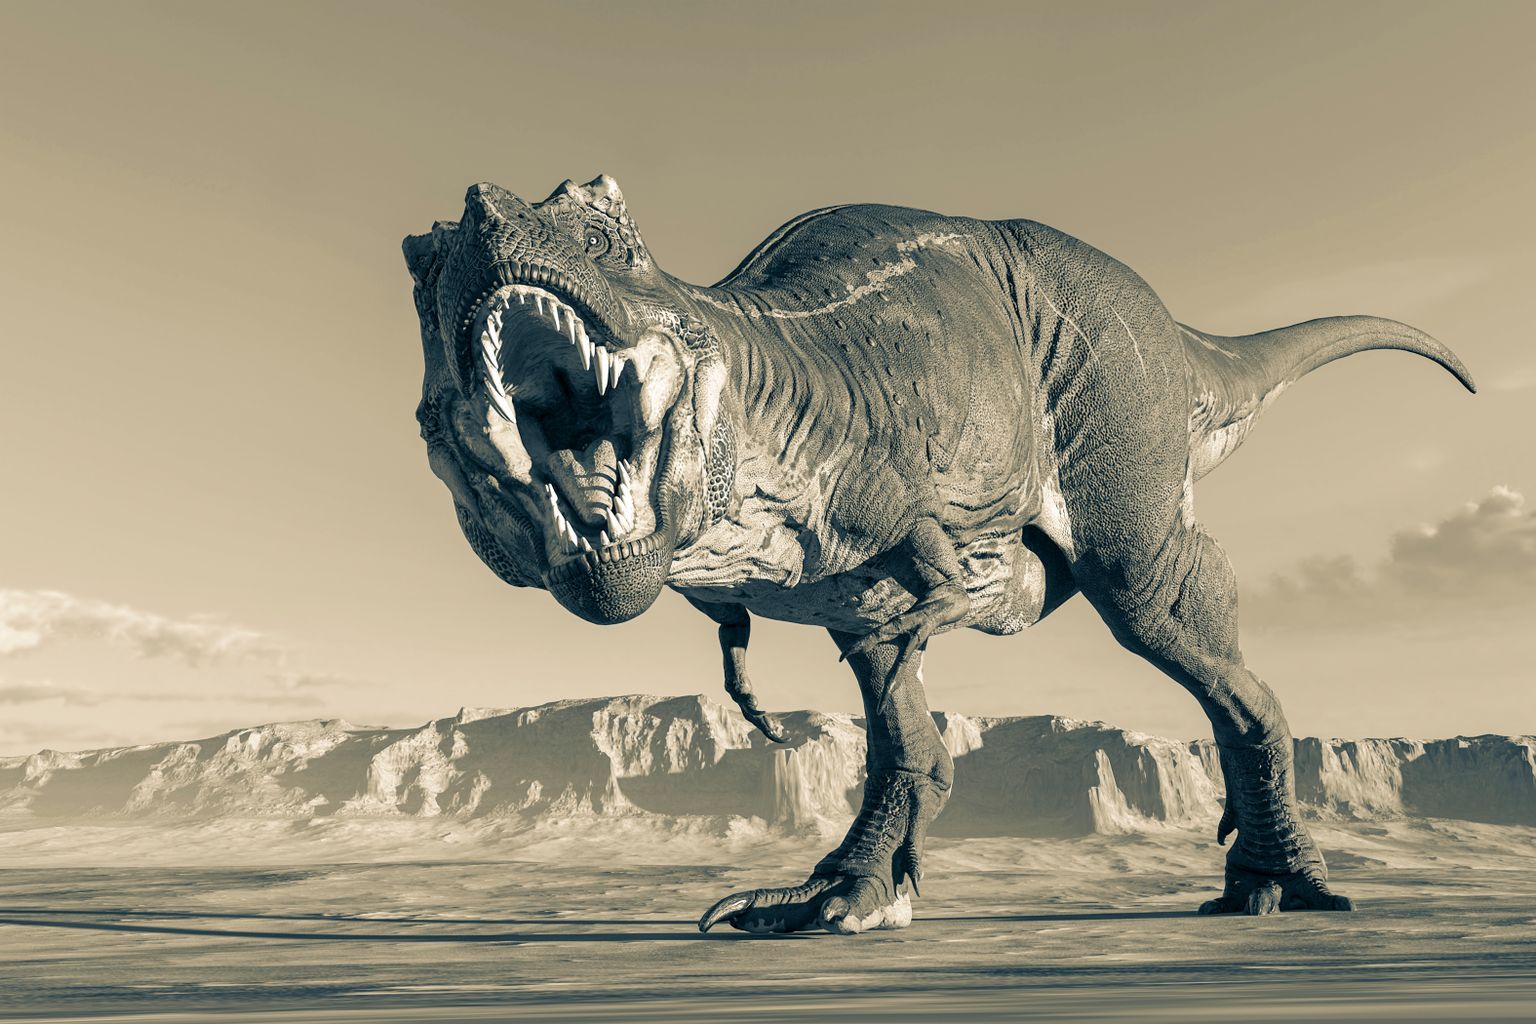 Arvutijoonistus türannosaurusest